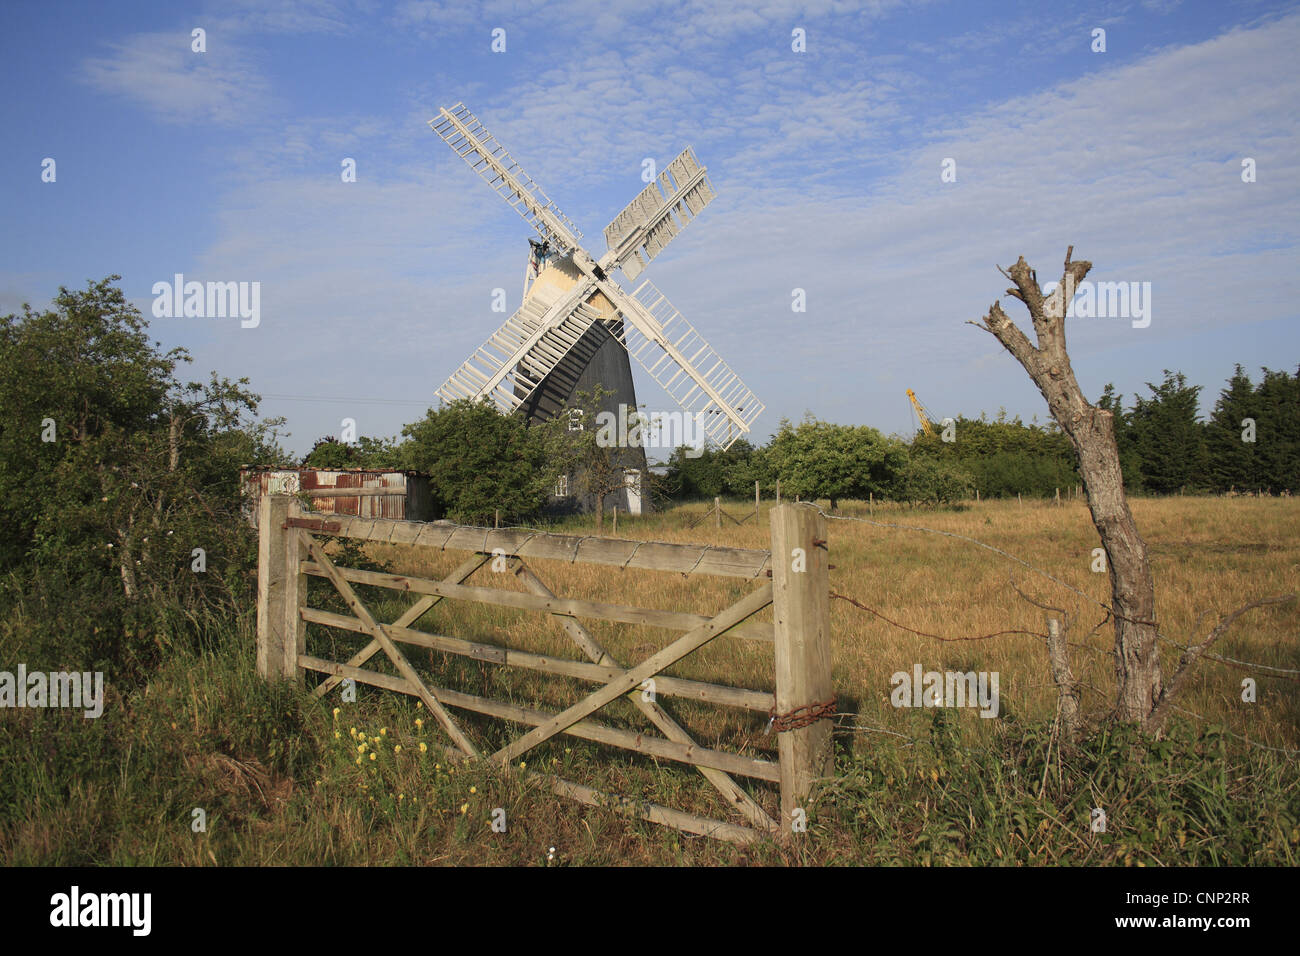 Siglo xix Tower Mill, Molino de Viento, Thelnetham Thelnetham, poco Ouse Valley, en Suffolk, Inglaterra, junio Foto de stock